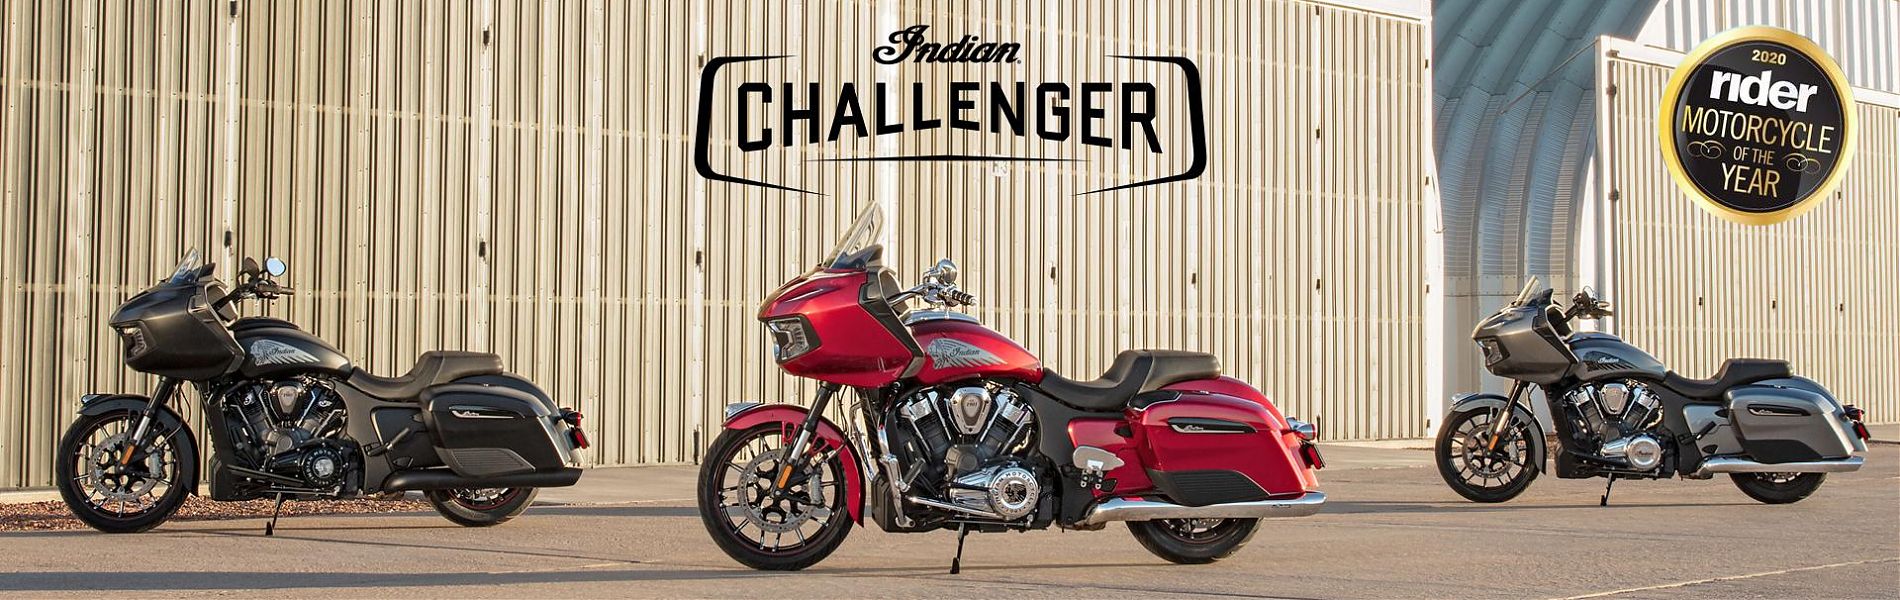 Indian Challenger – мотоцикл года по версии Rider Magazine